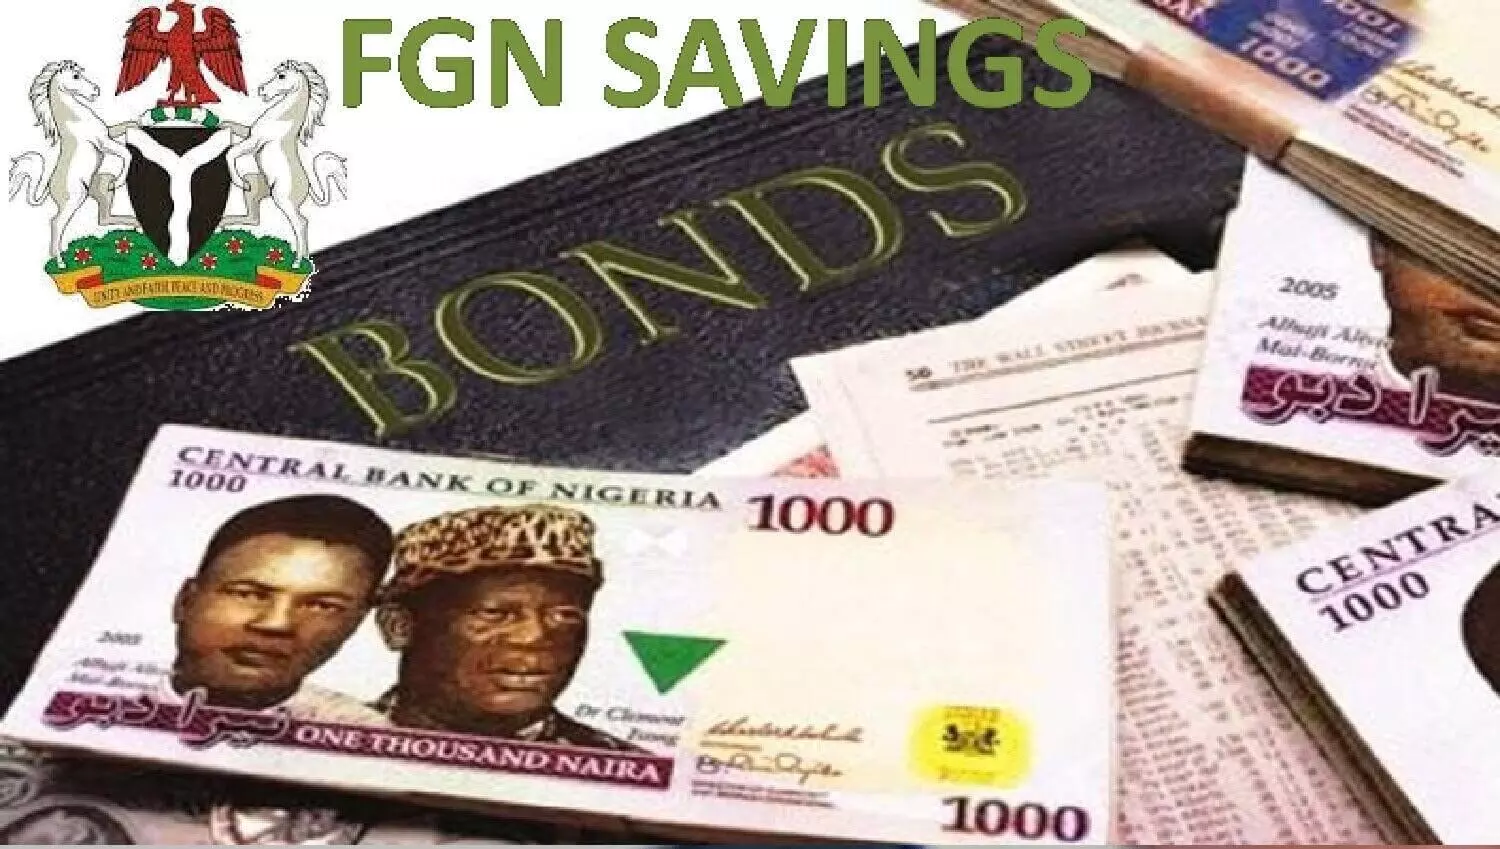 FGN securities promotes national development - DMO